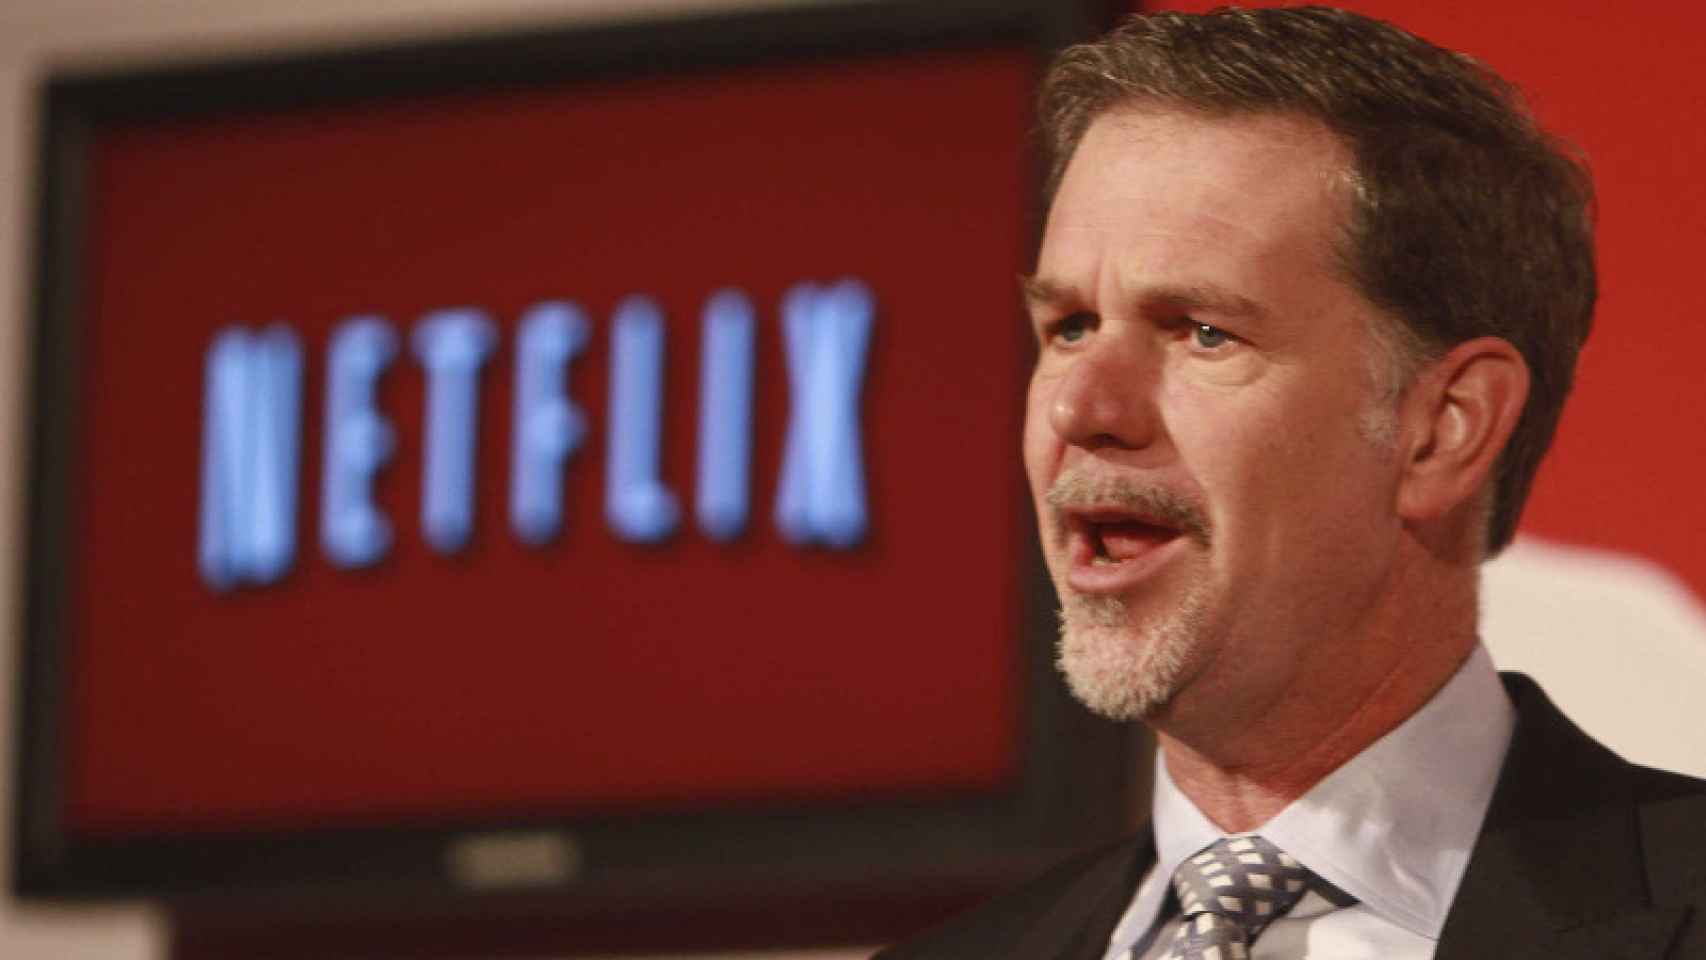 Reed Hastings, CEO de Netflix.